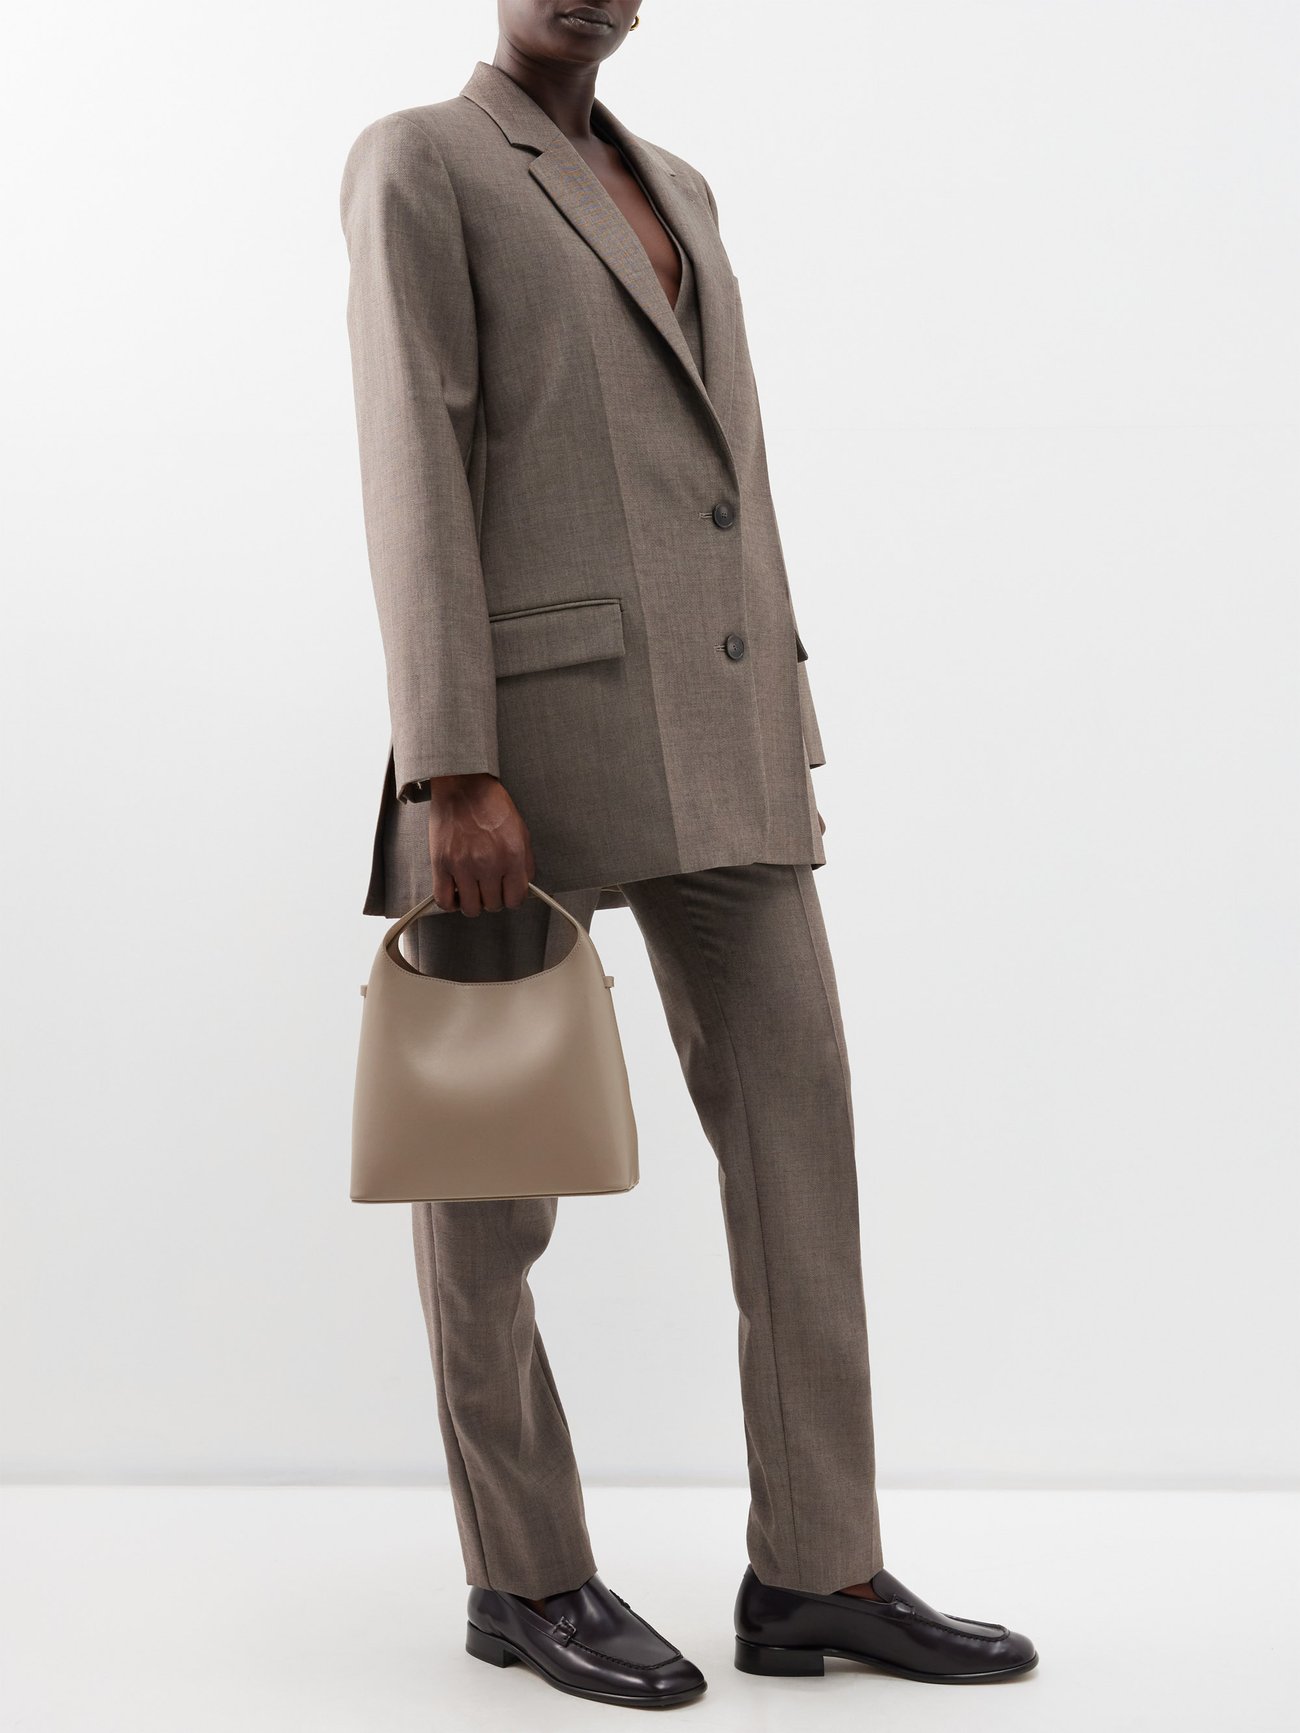 Grey Sac mini leather cross-body bag, Aesther Ekme